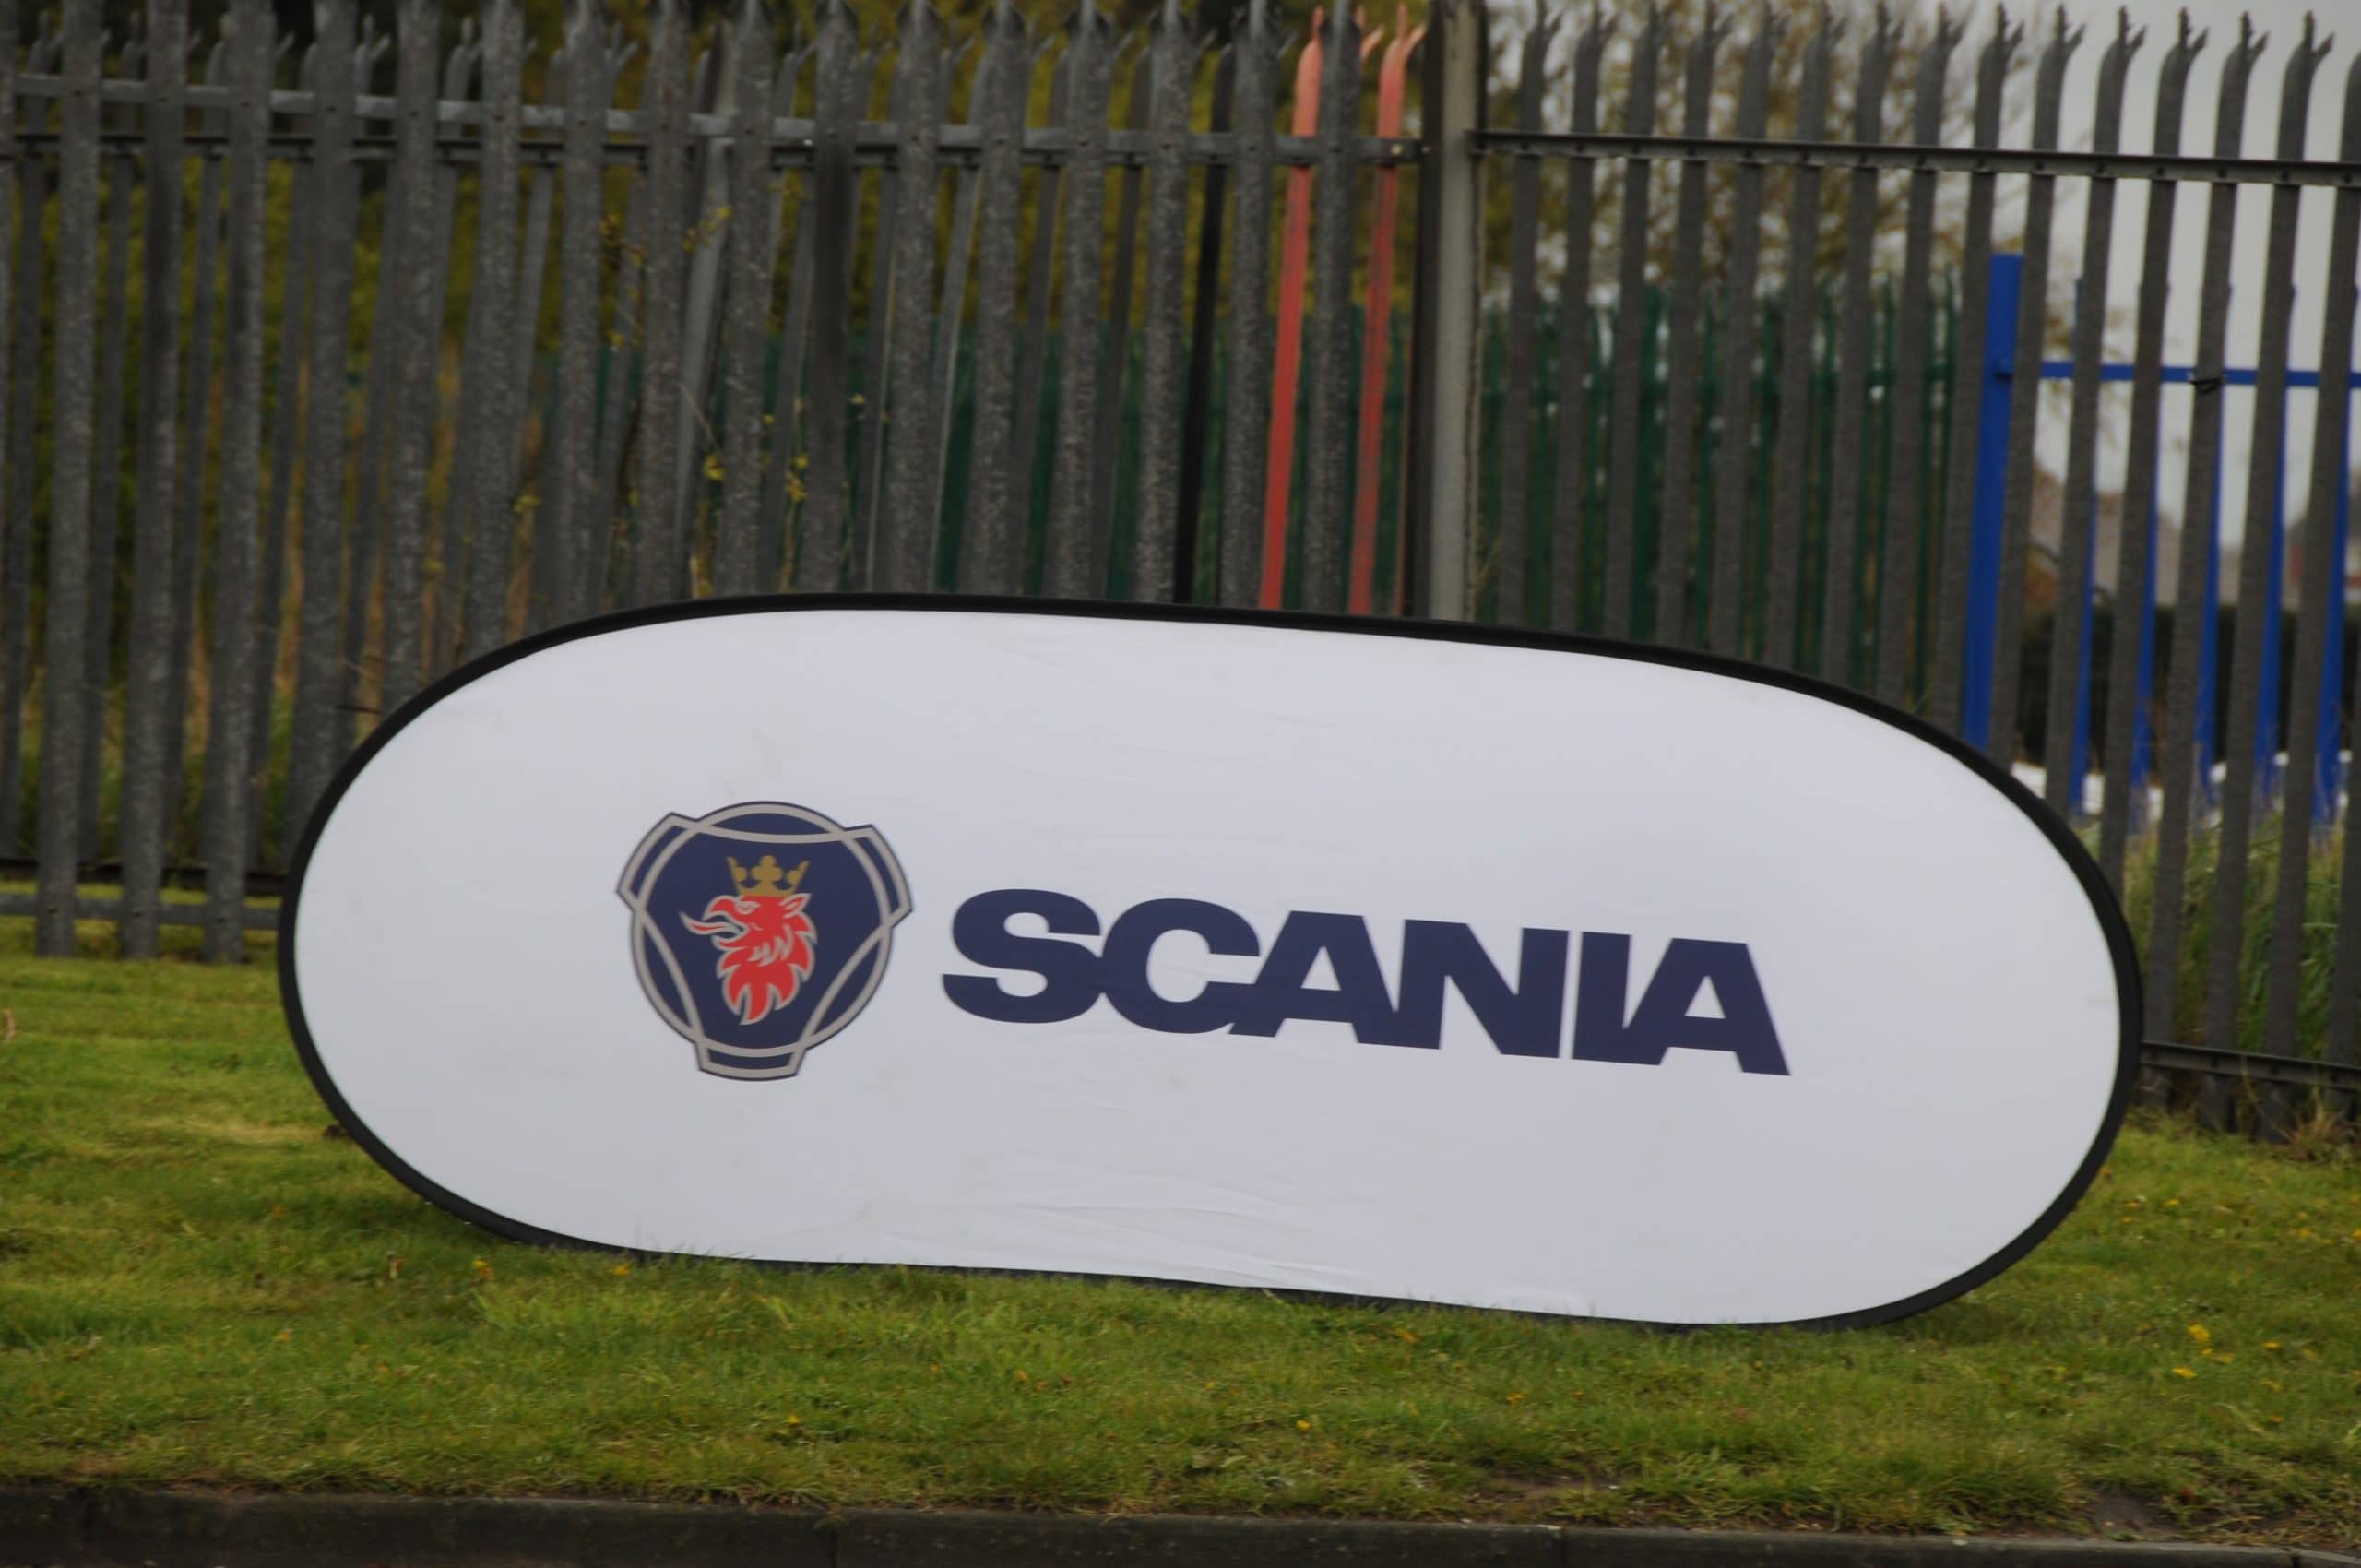 Scania Go premium used vehicle platform launched